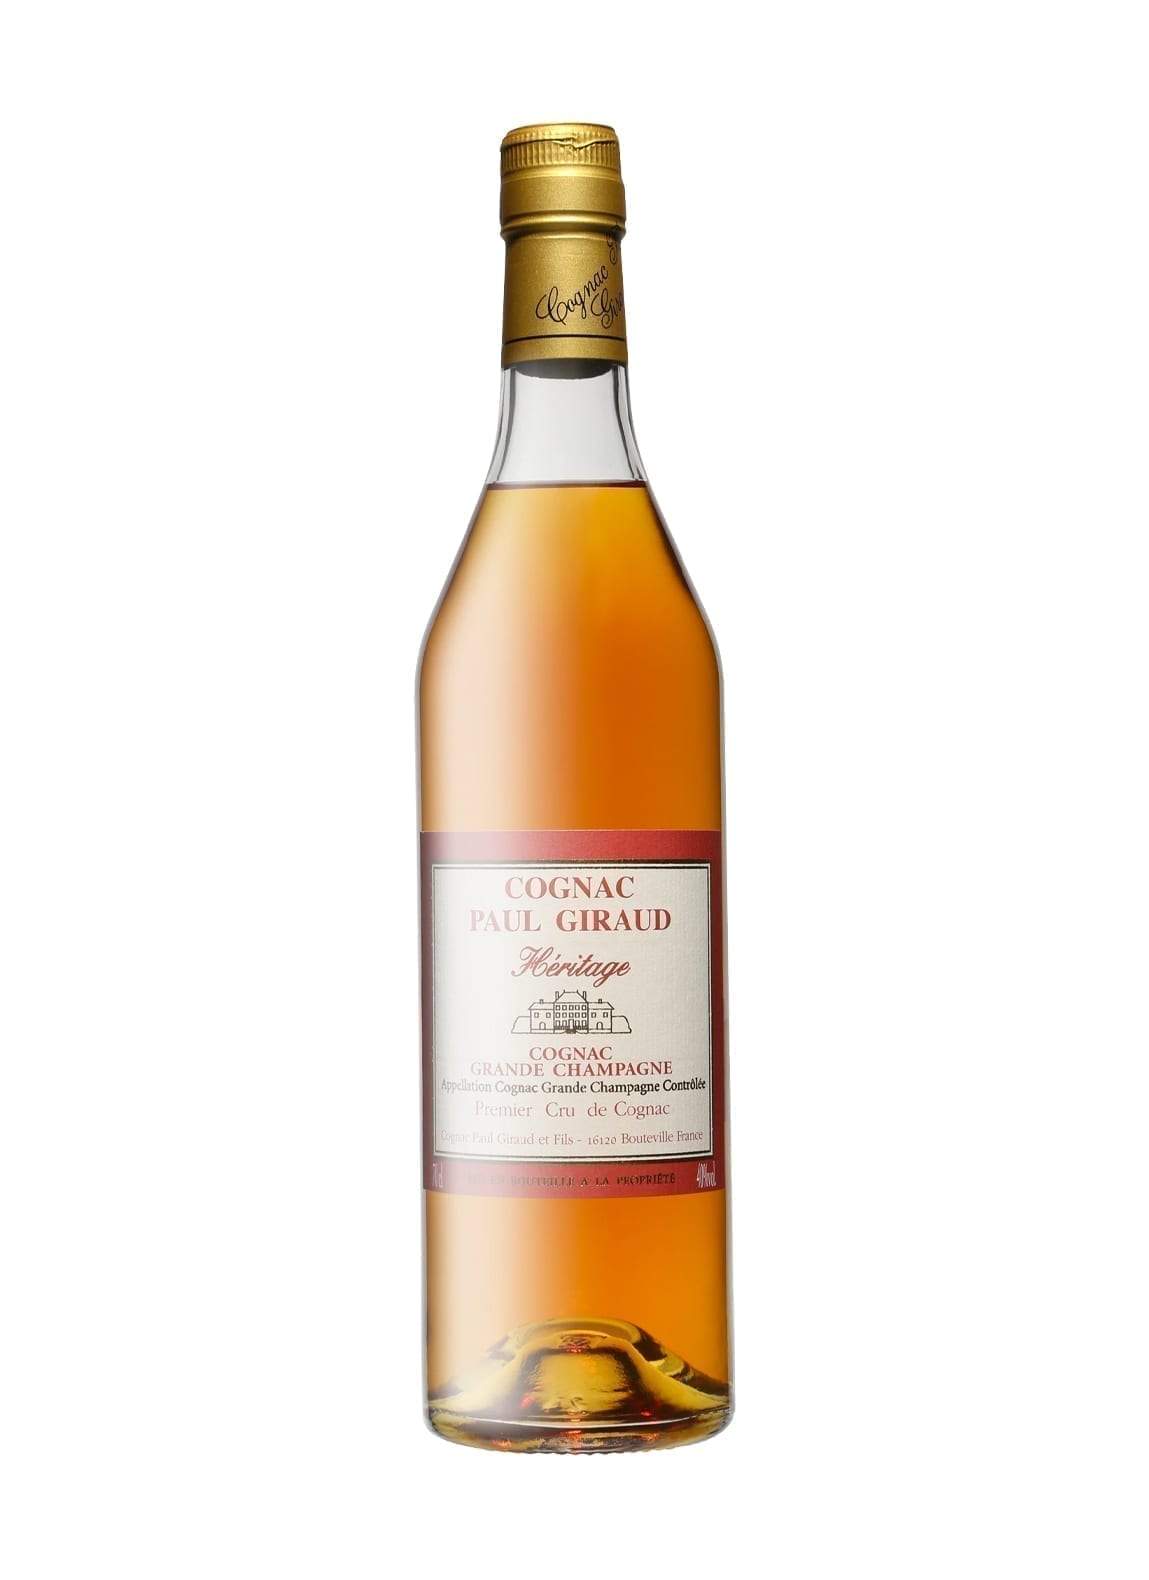 Paul Giraud Cognac Heritage 60 years Grande Champagne 40% 700ml | Brandy | Shop online at Spirits of France